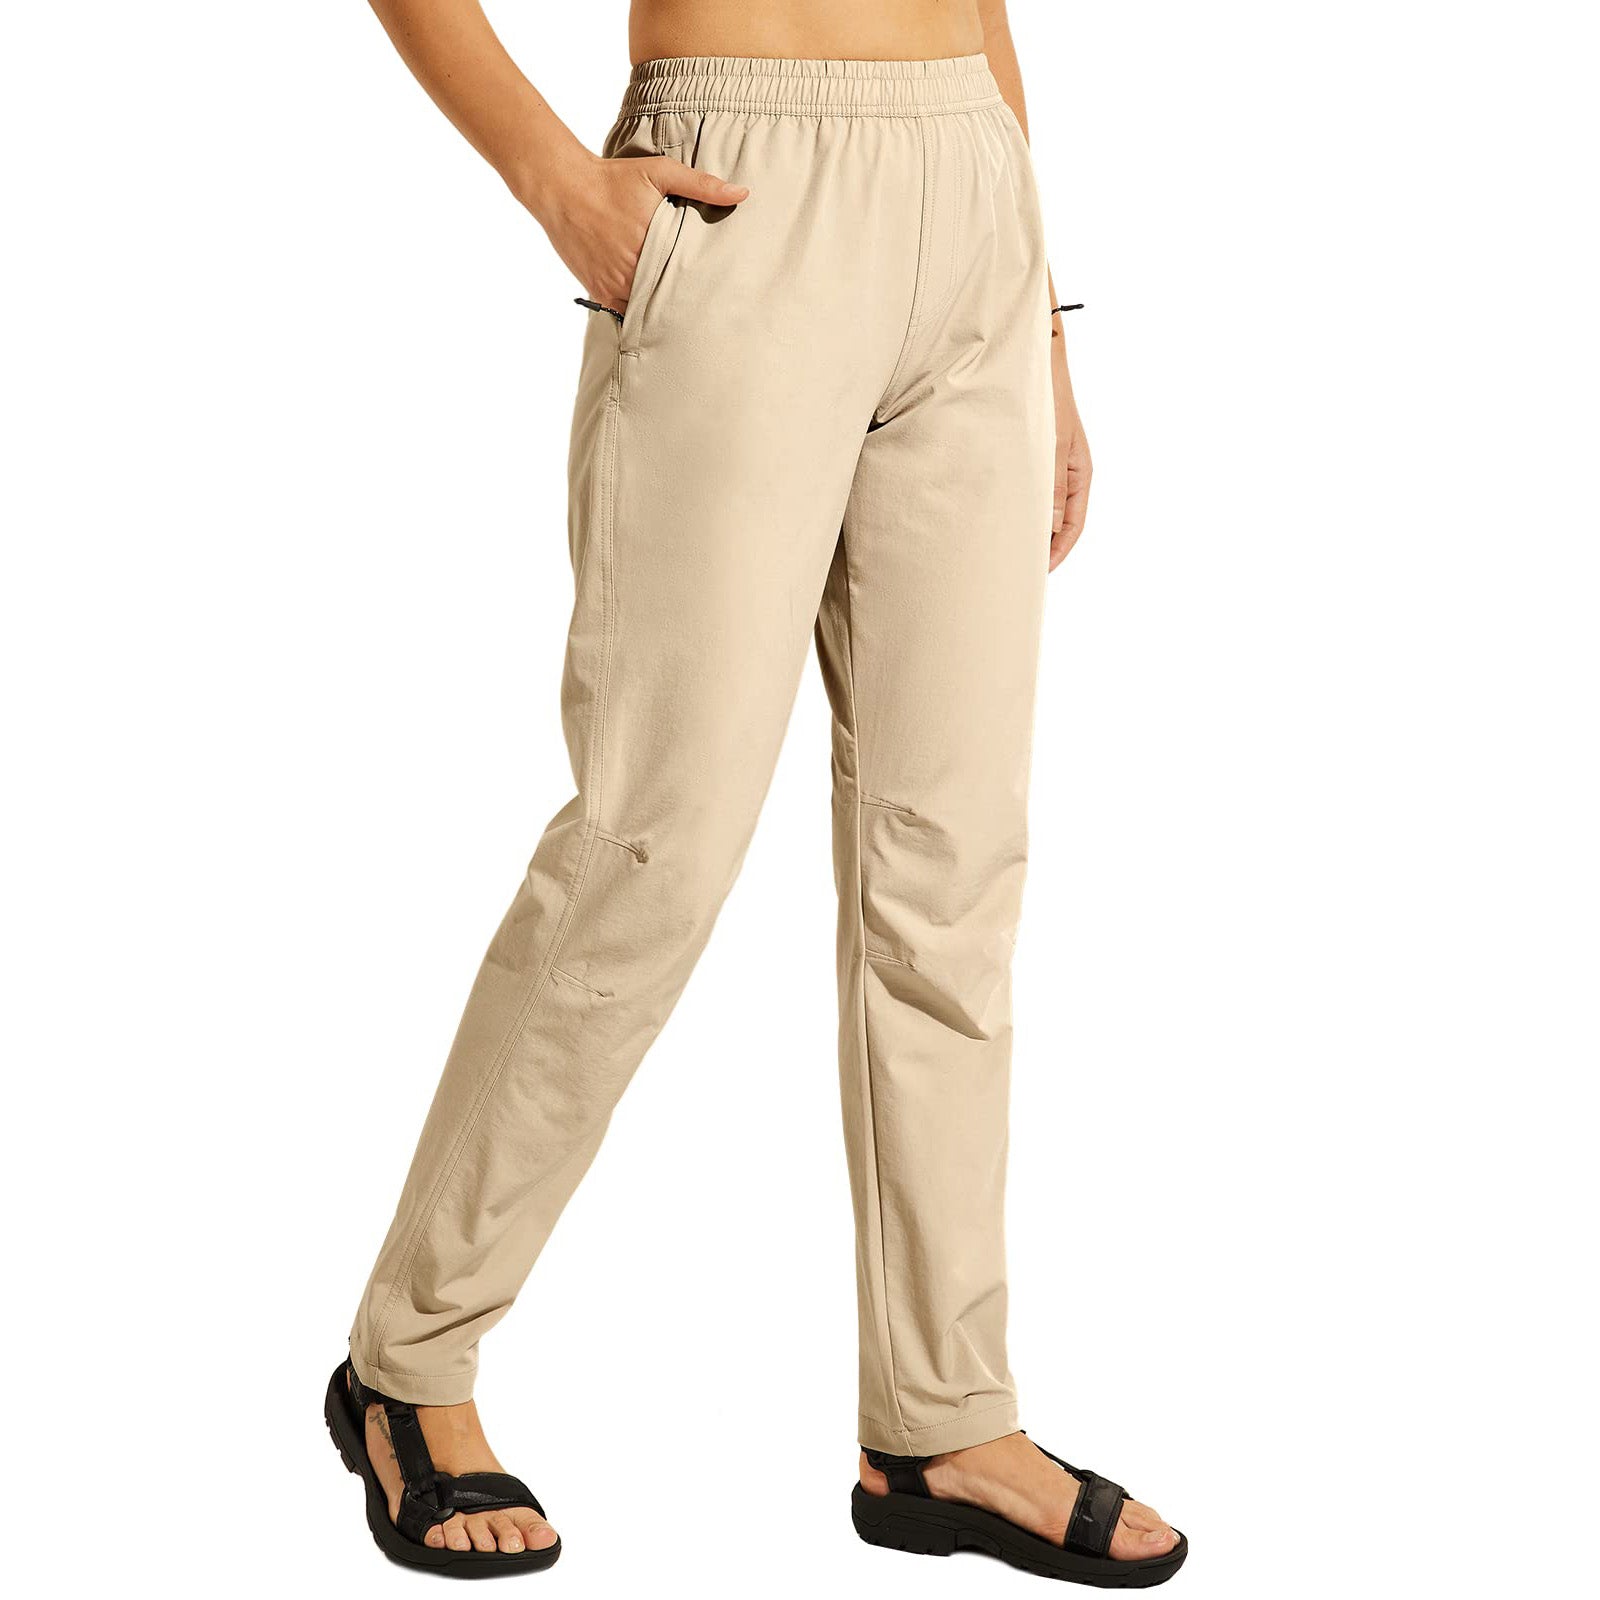 Women's Hiking Pants Quick Dry Lightweight Cargo Pants - Khaki / XS